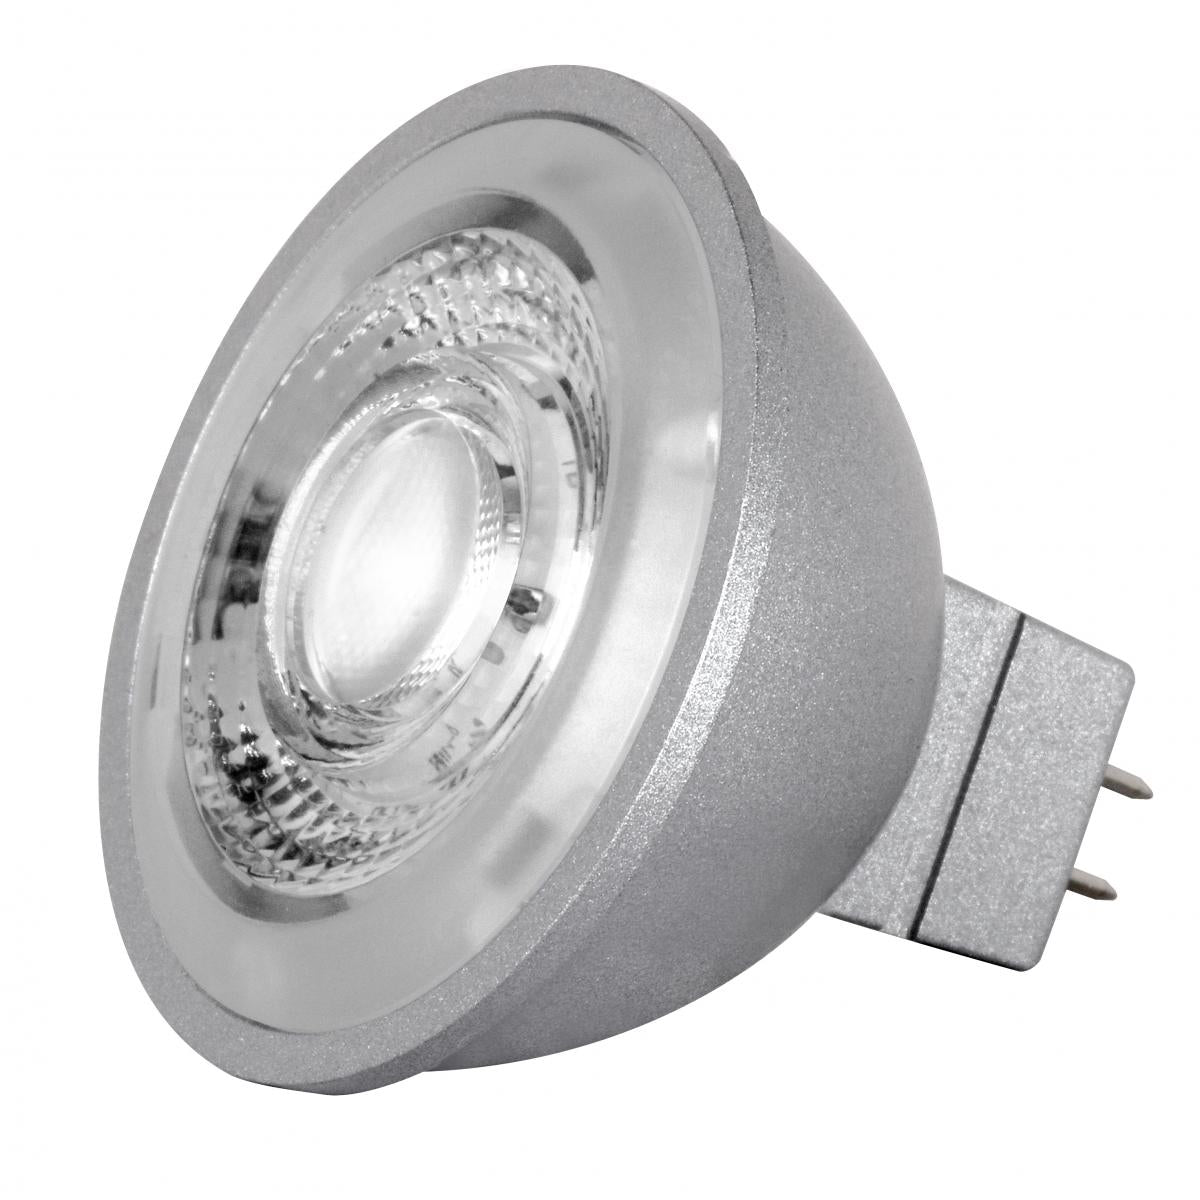 MR16 Reflector LED bulb, 8 watt, 490 Lumens, 5000K, GU5.3 Base, 40 Deg. Flood